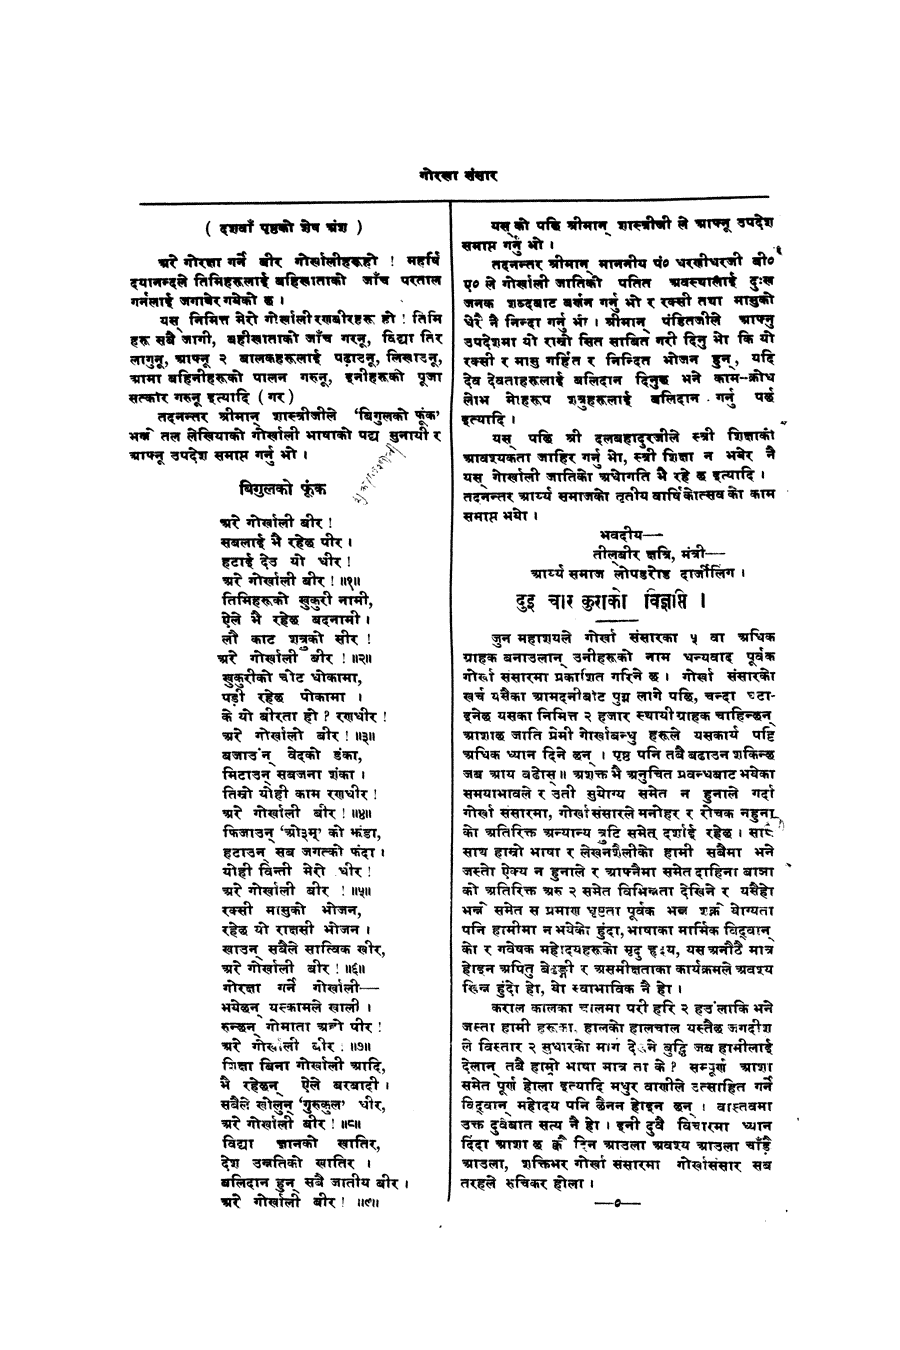 Gorkha Sansar, 21 Dec 1926, page 4